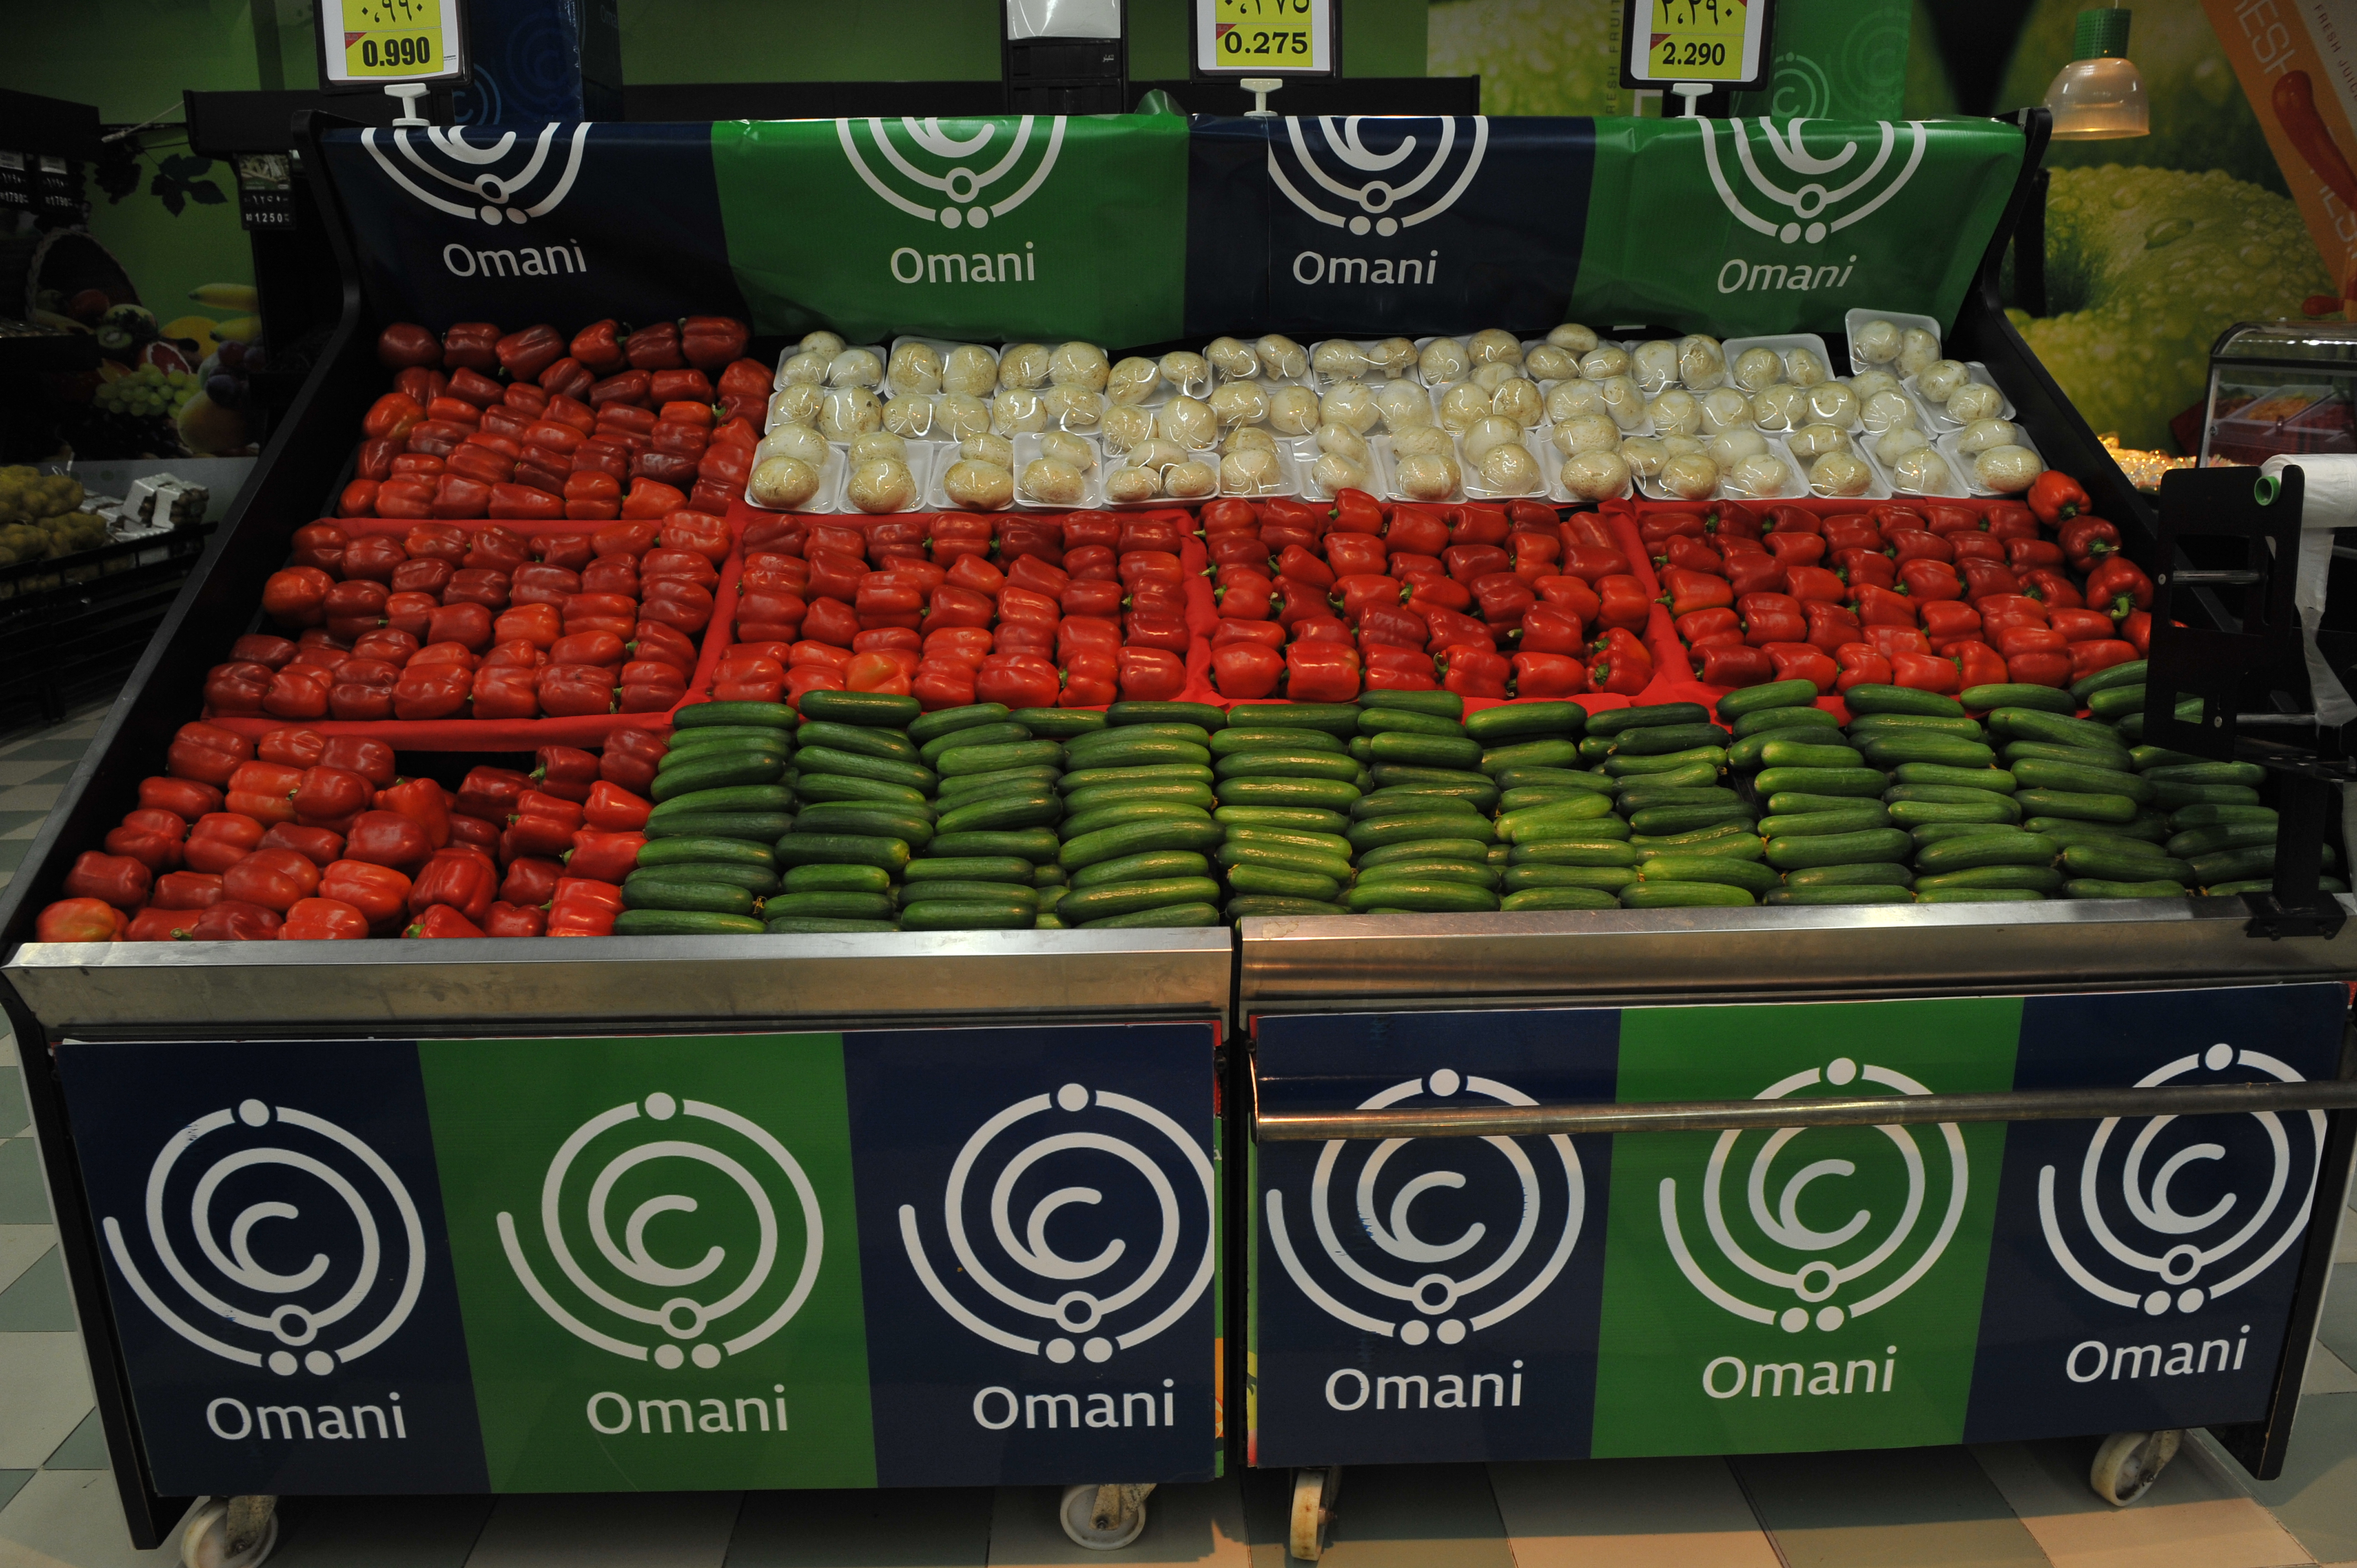 Consumer Price Index in Oman shows upward trend